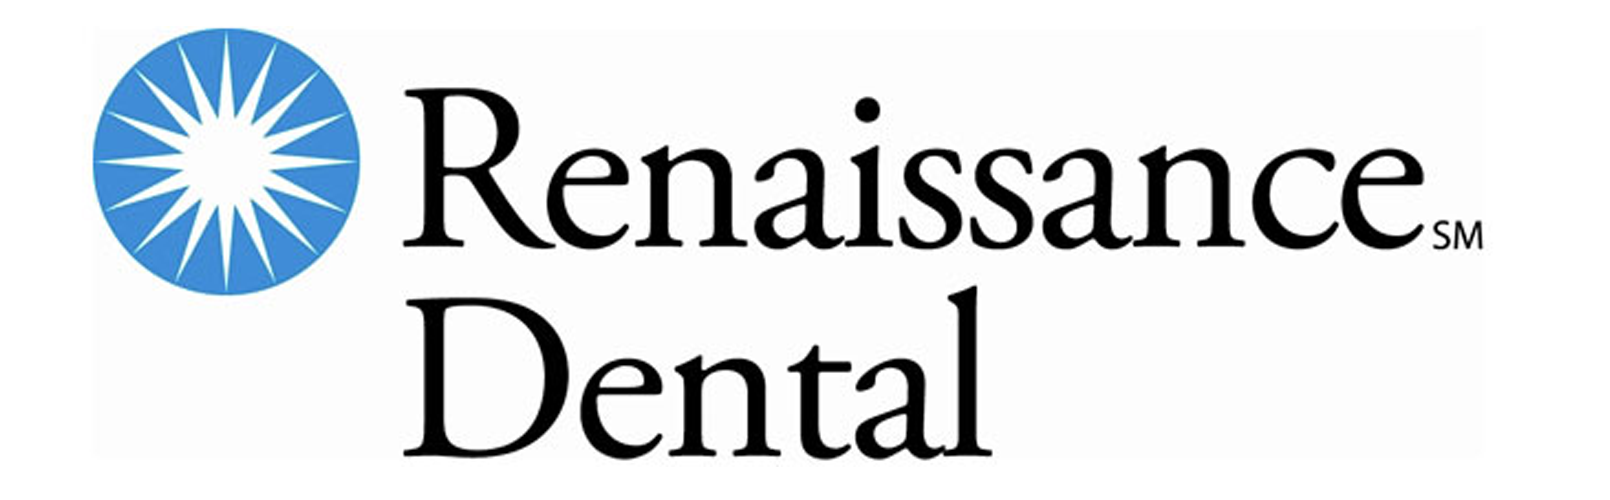 Insurance-Renaissance-Dental